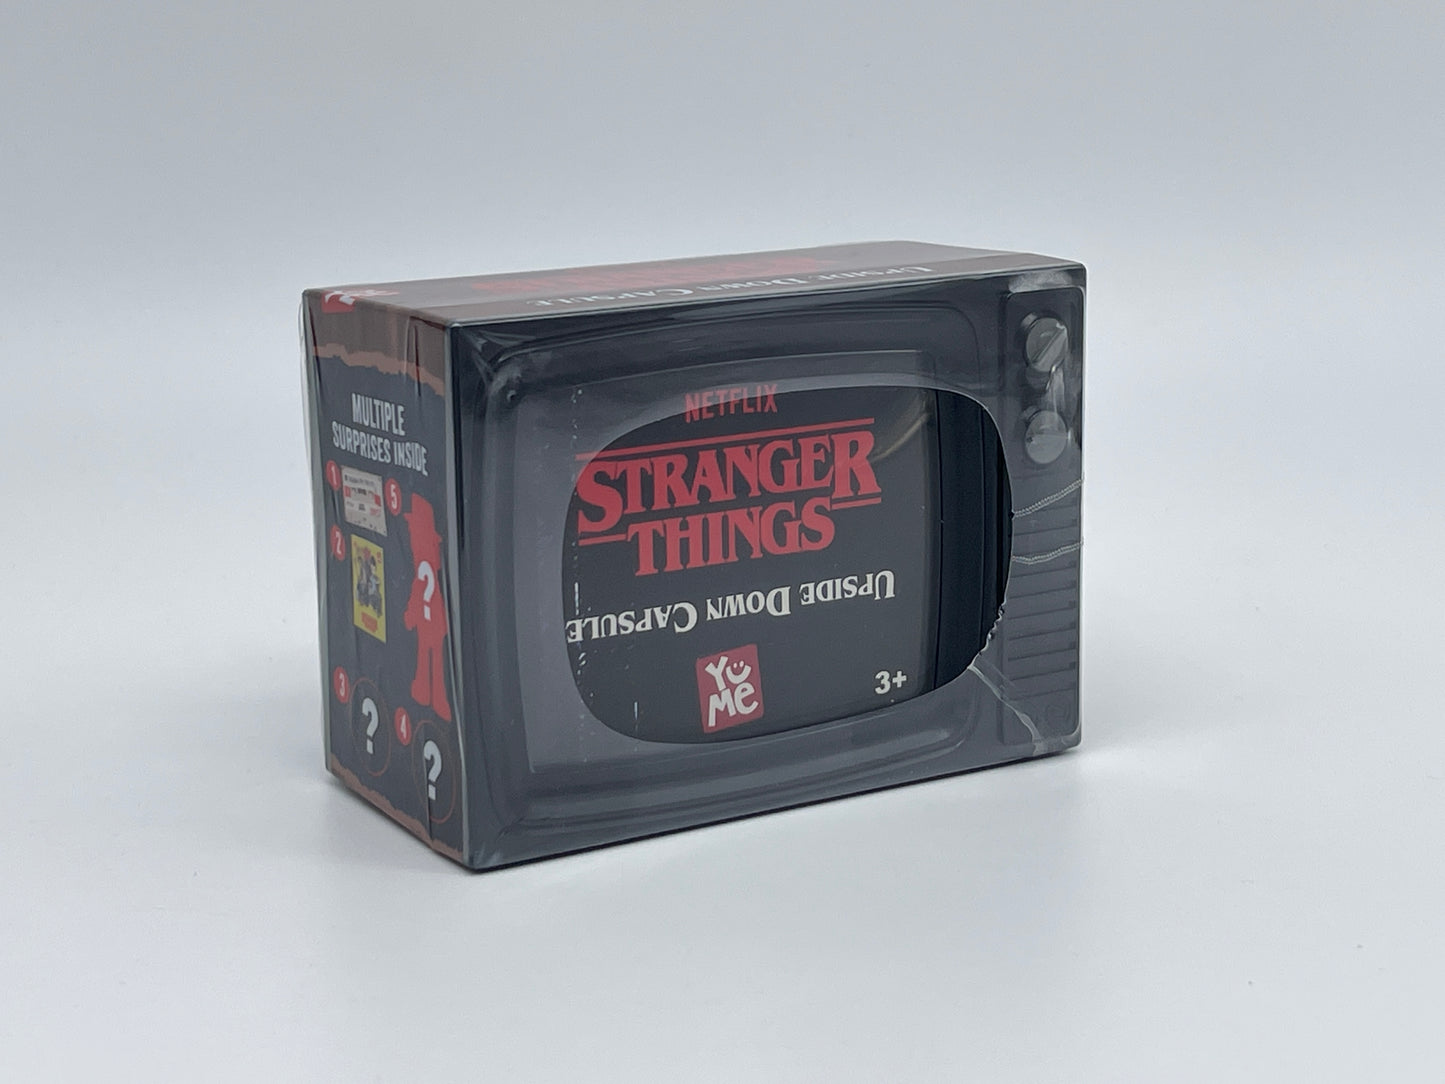 Stranger Things "Upside Down Capsule" Yu Me Toys Blindbox (Netflix)